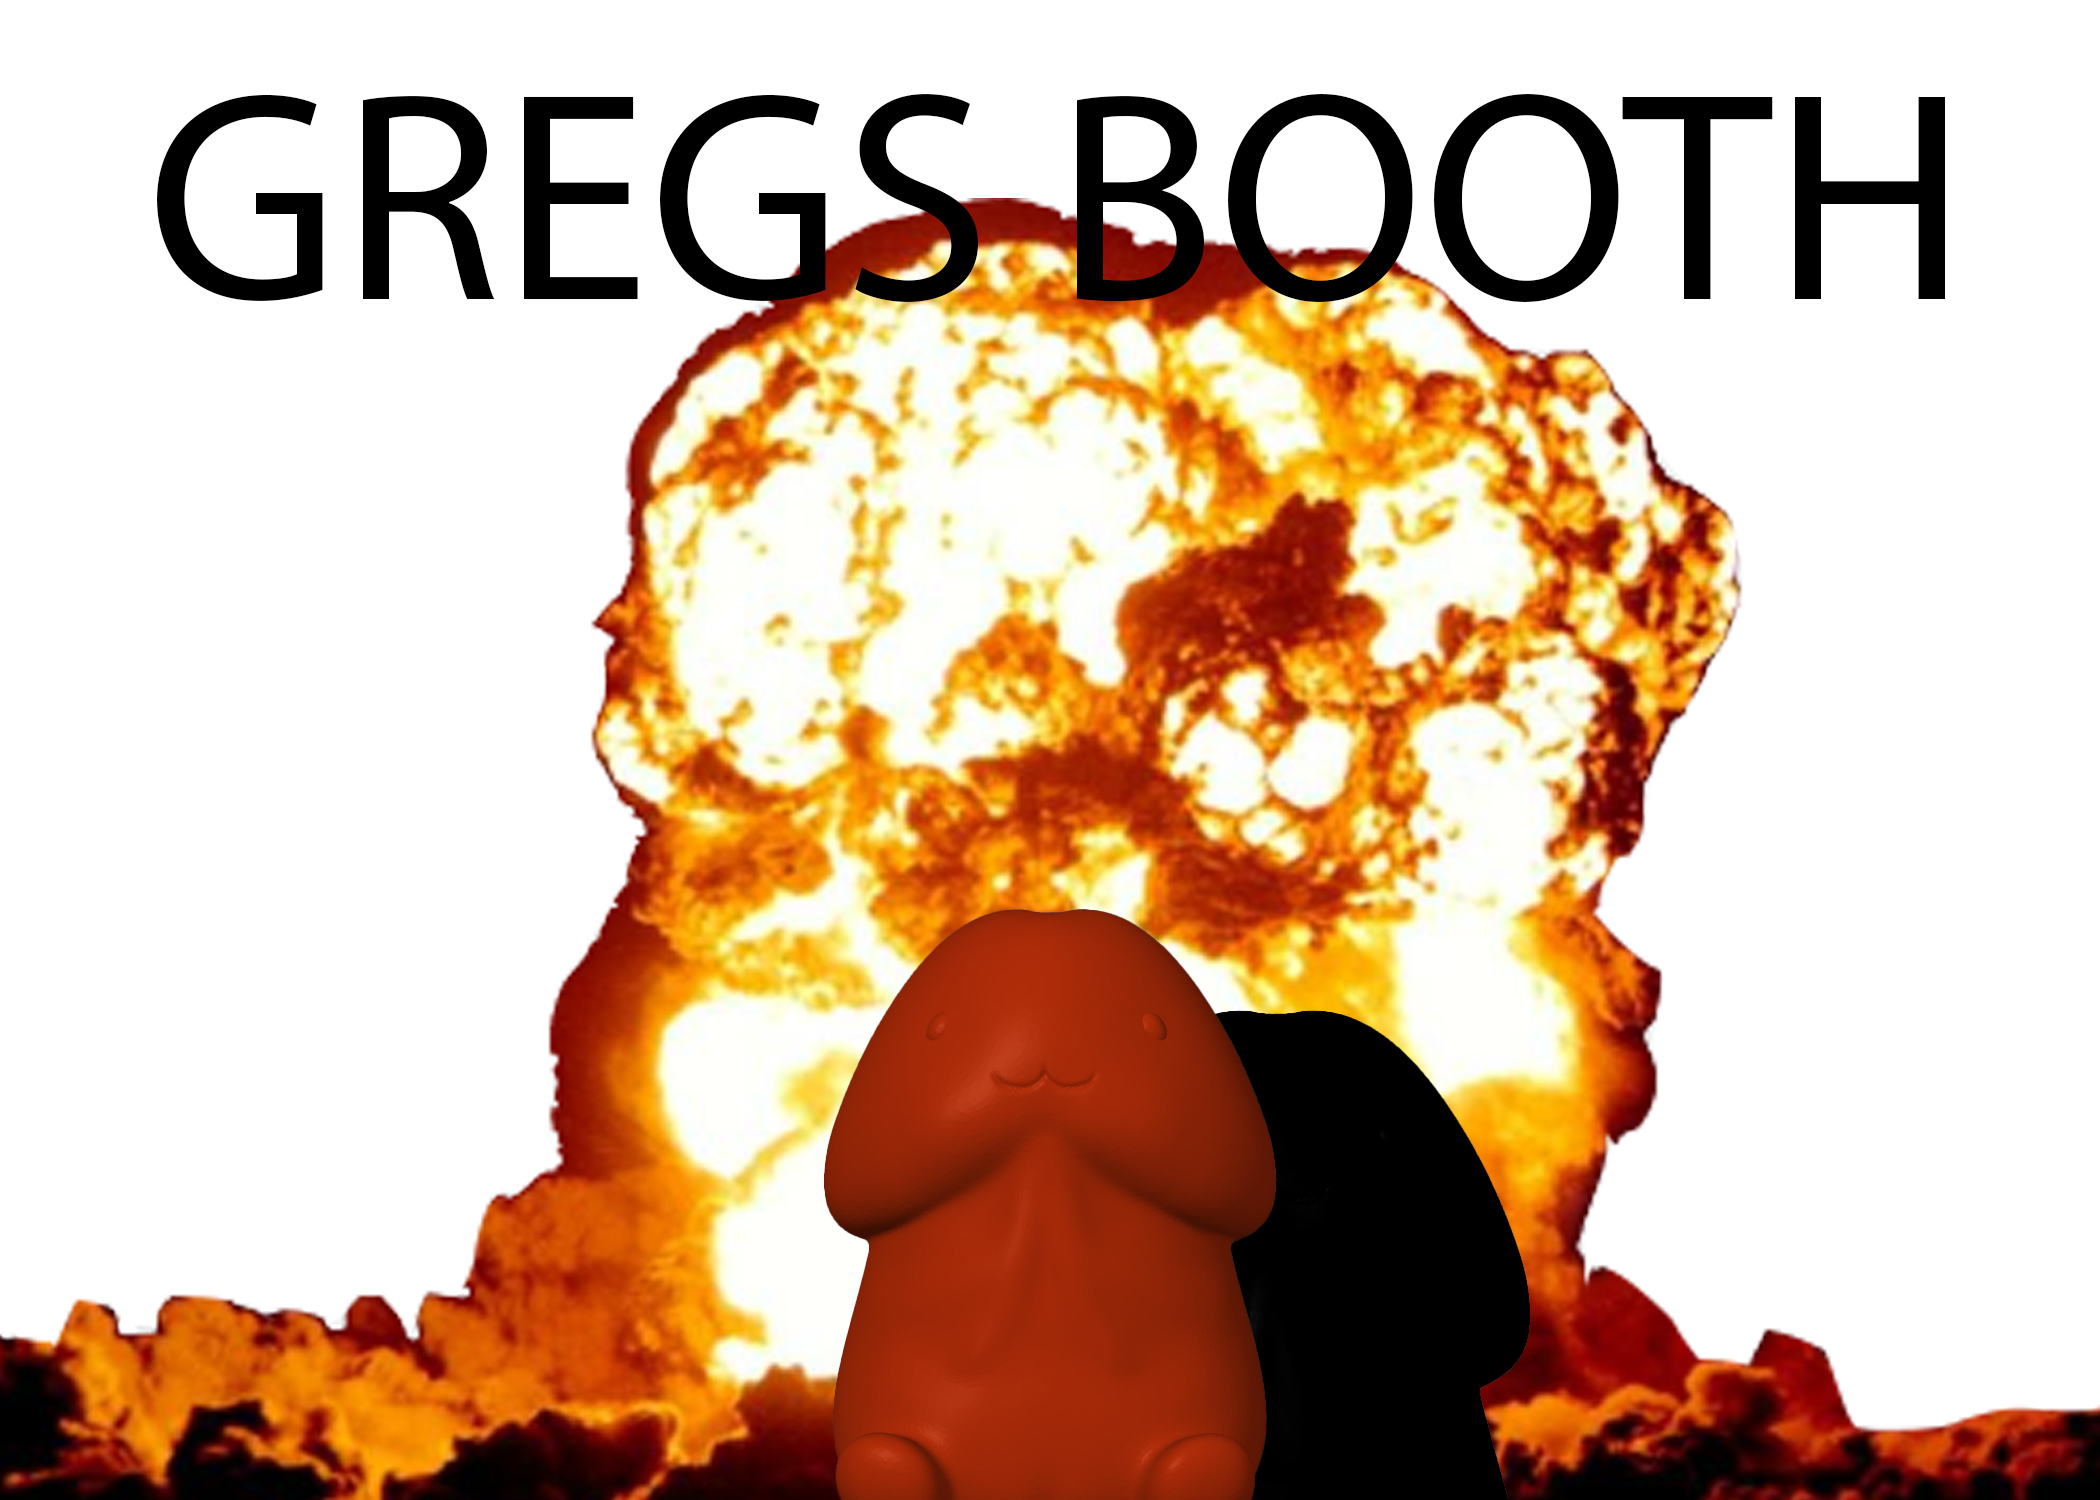 Greg's Booth